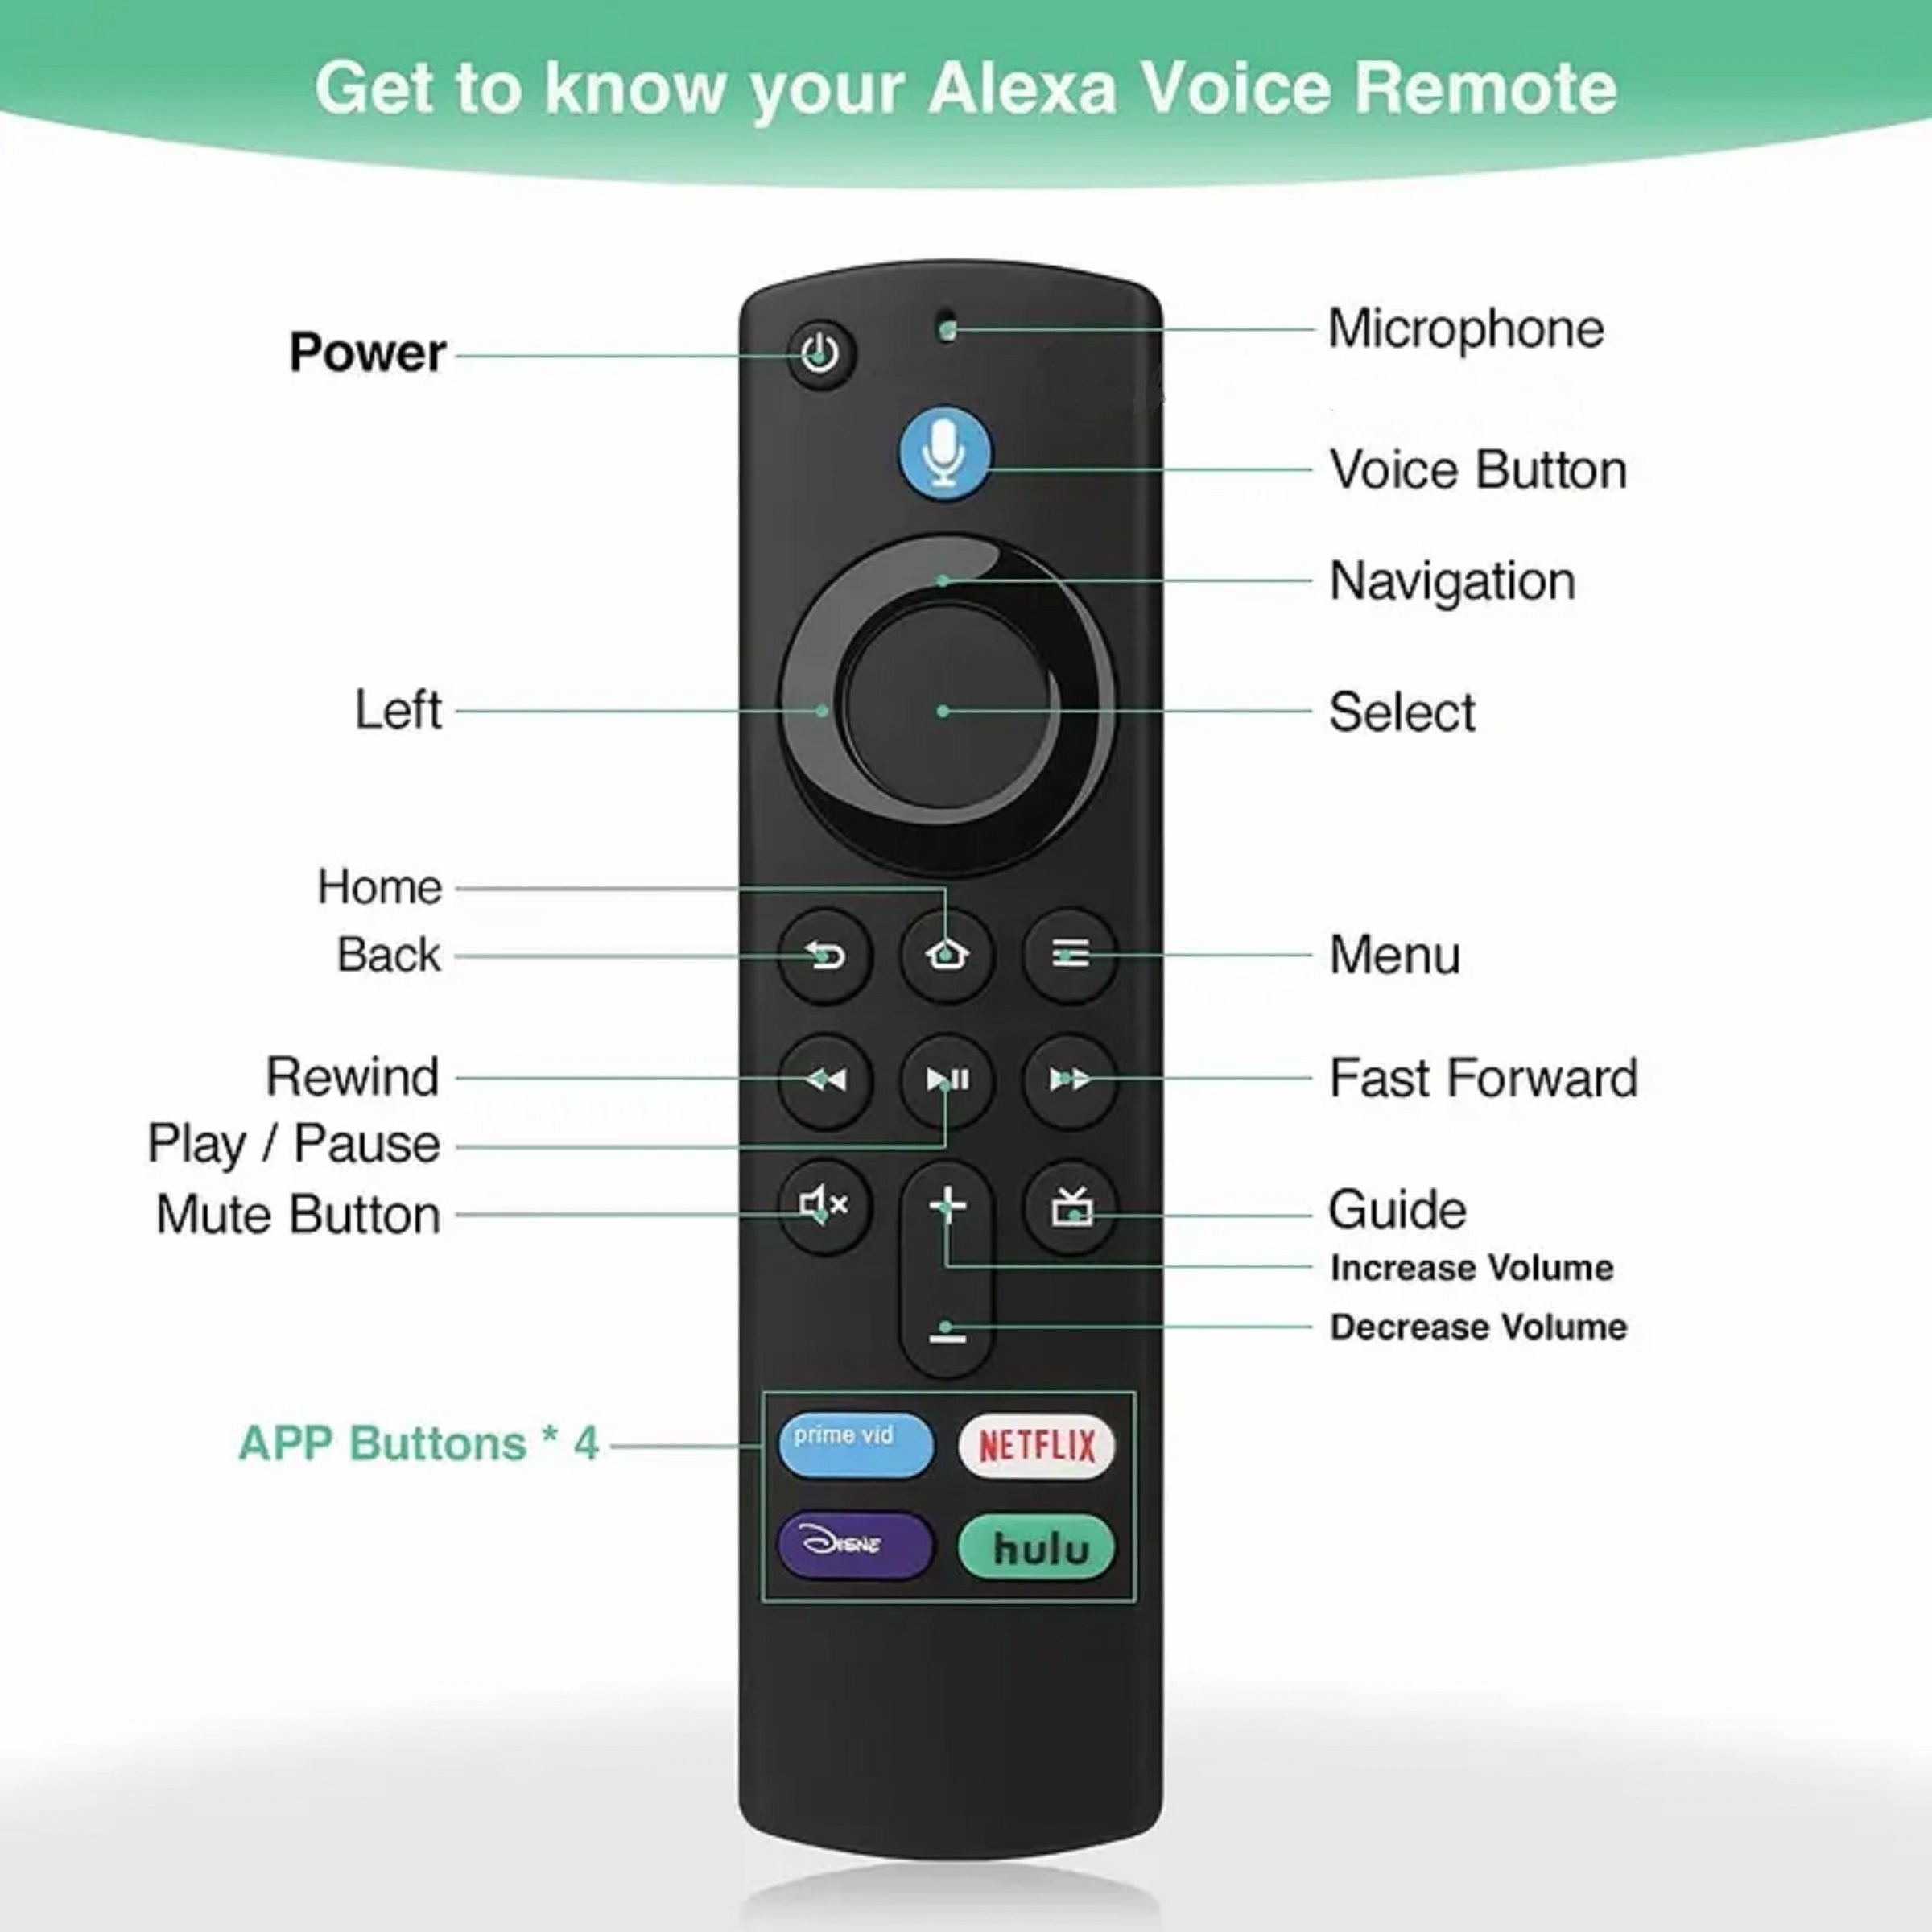 Fire TV Stick with Alexa Voice Remote (3rd Gen)